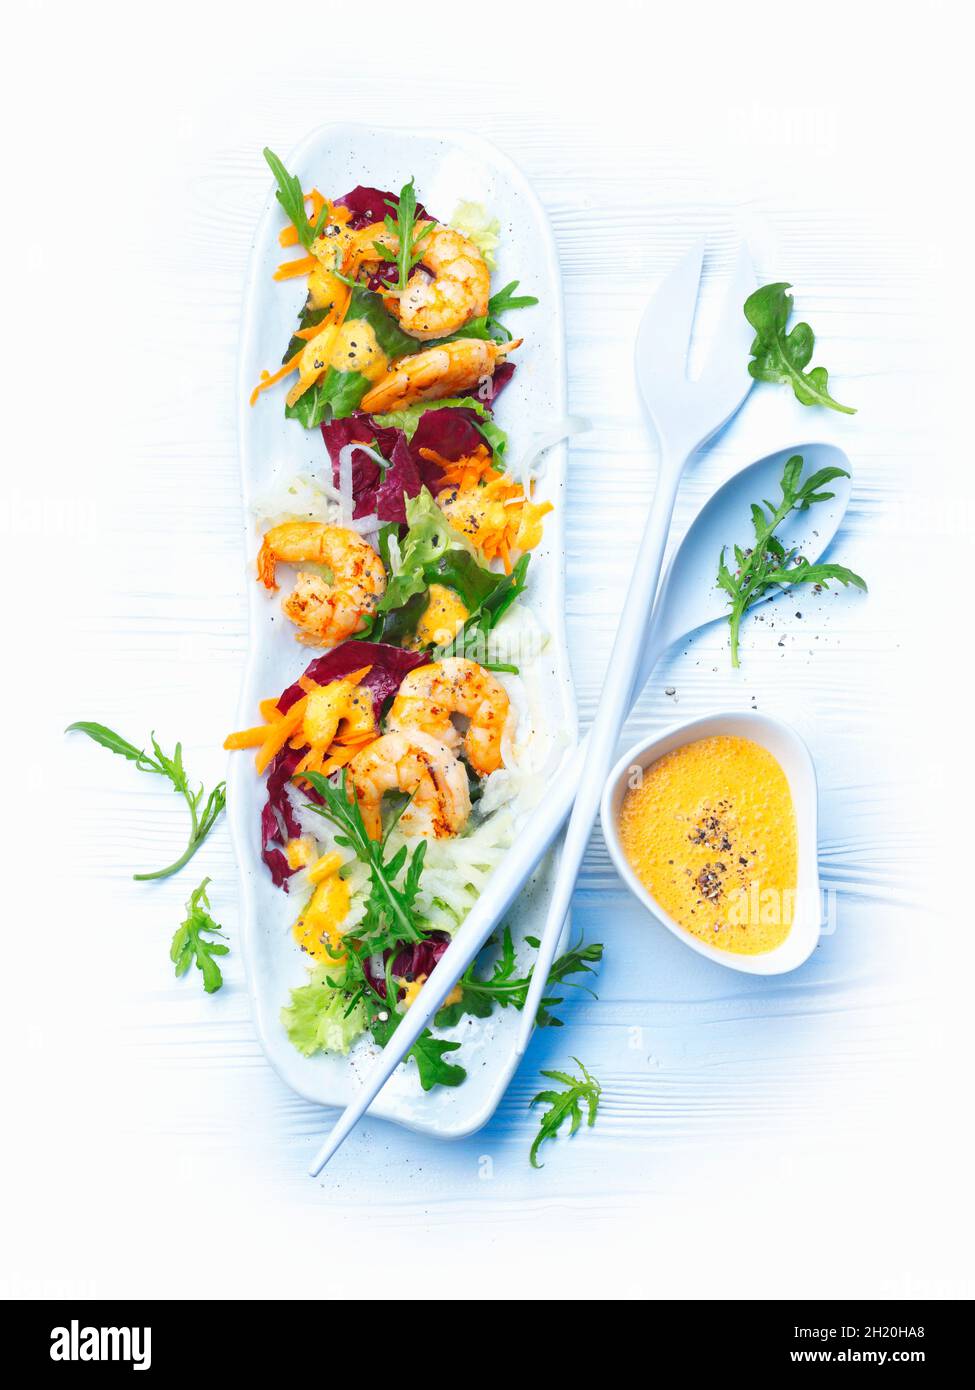 Summer salad with shrimp Stock Photo